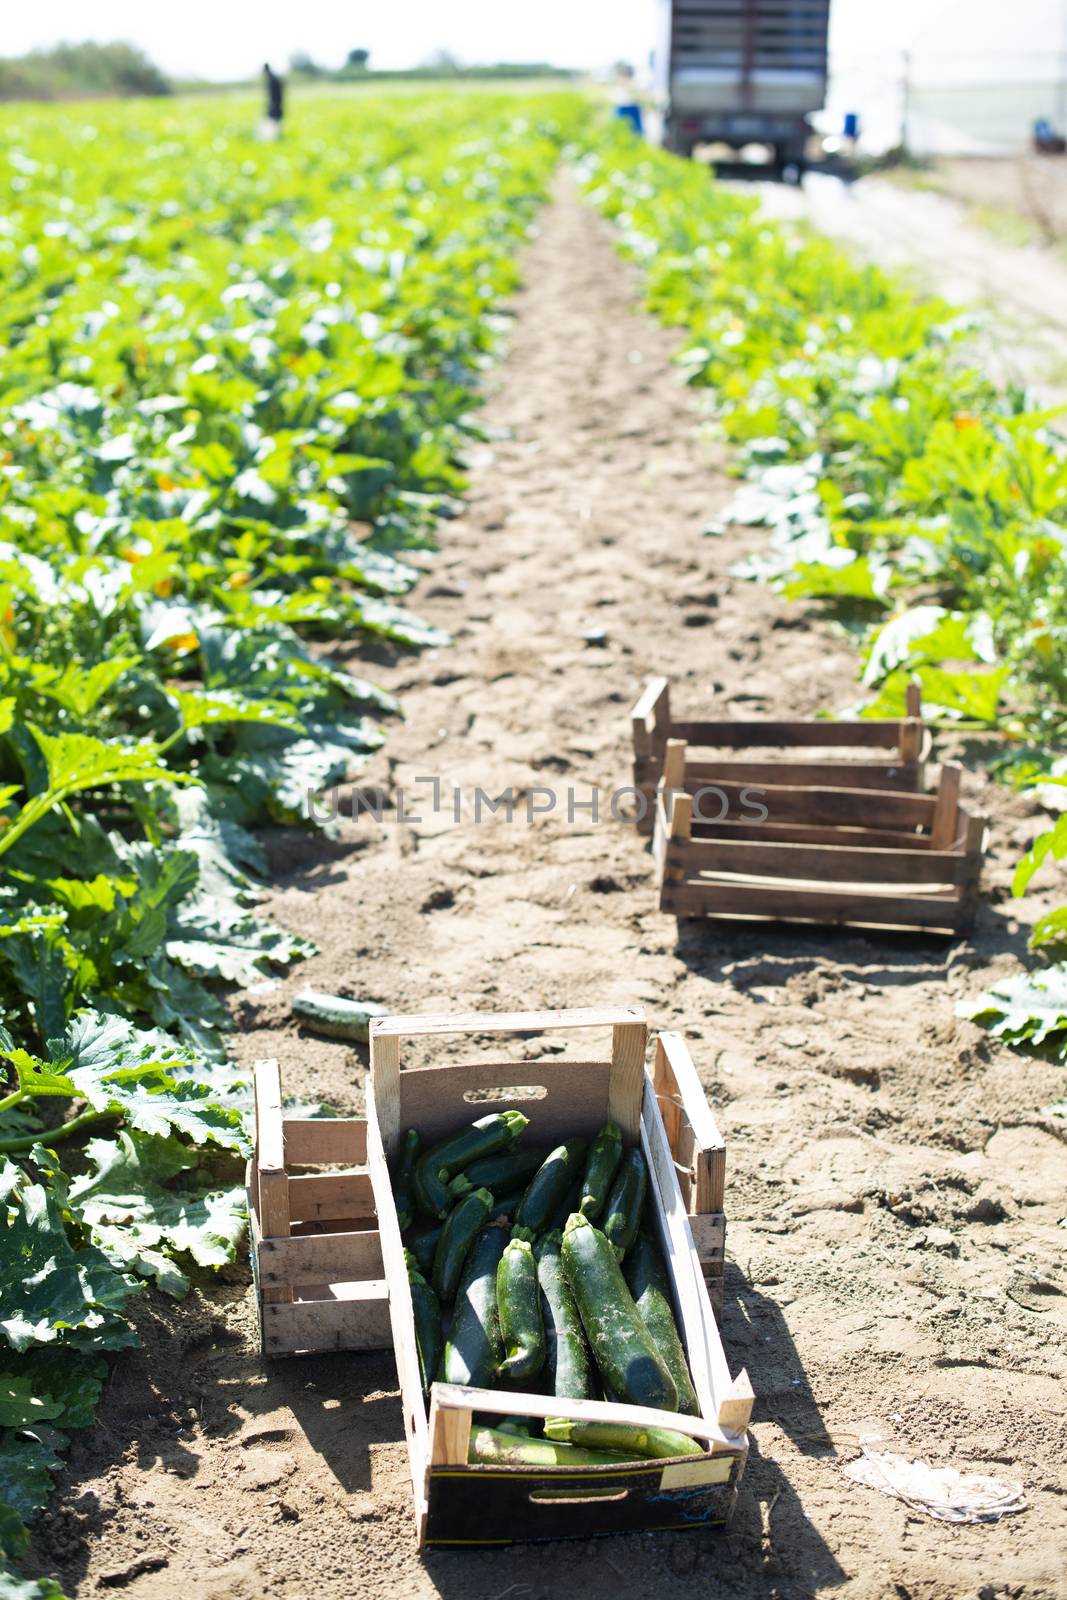 Picking zucchini in industrial farm. Wooden crates with zucchini by deyan_georgiev